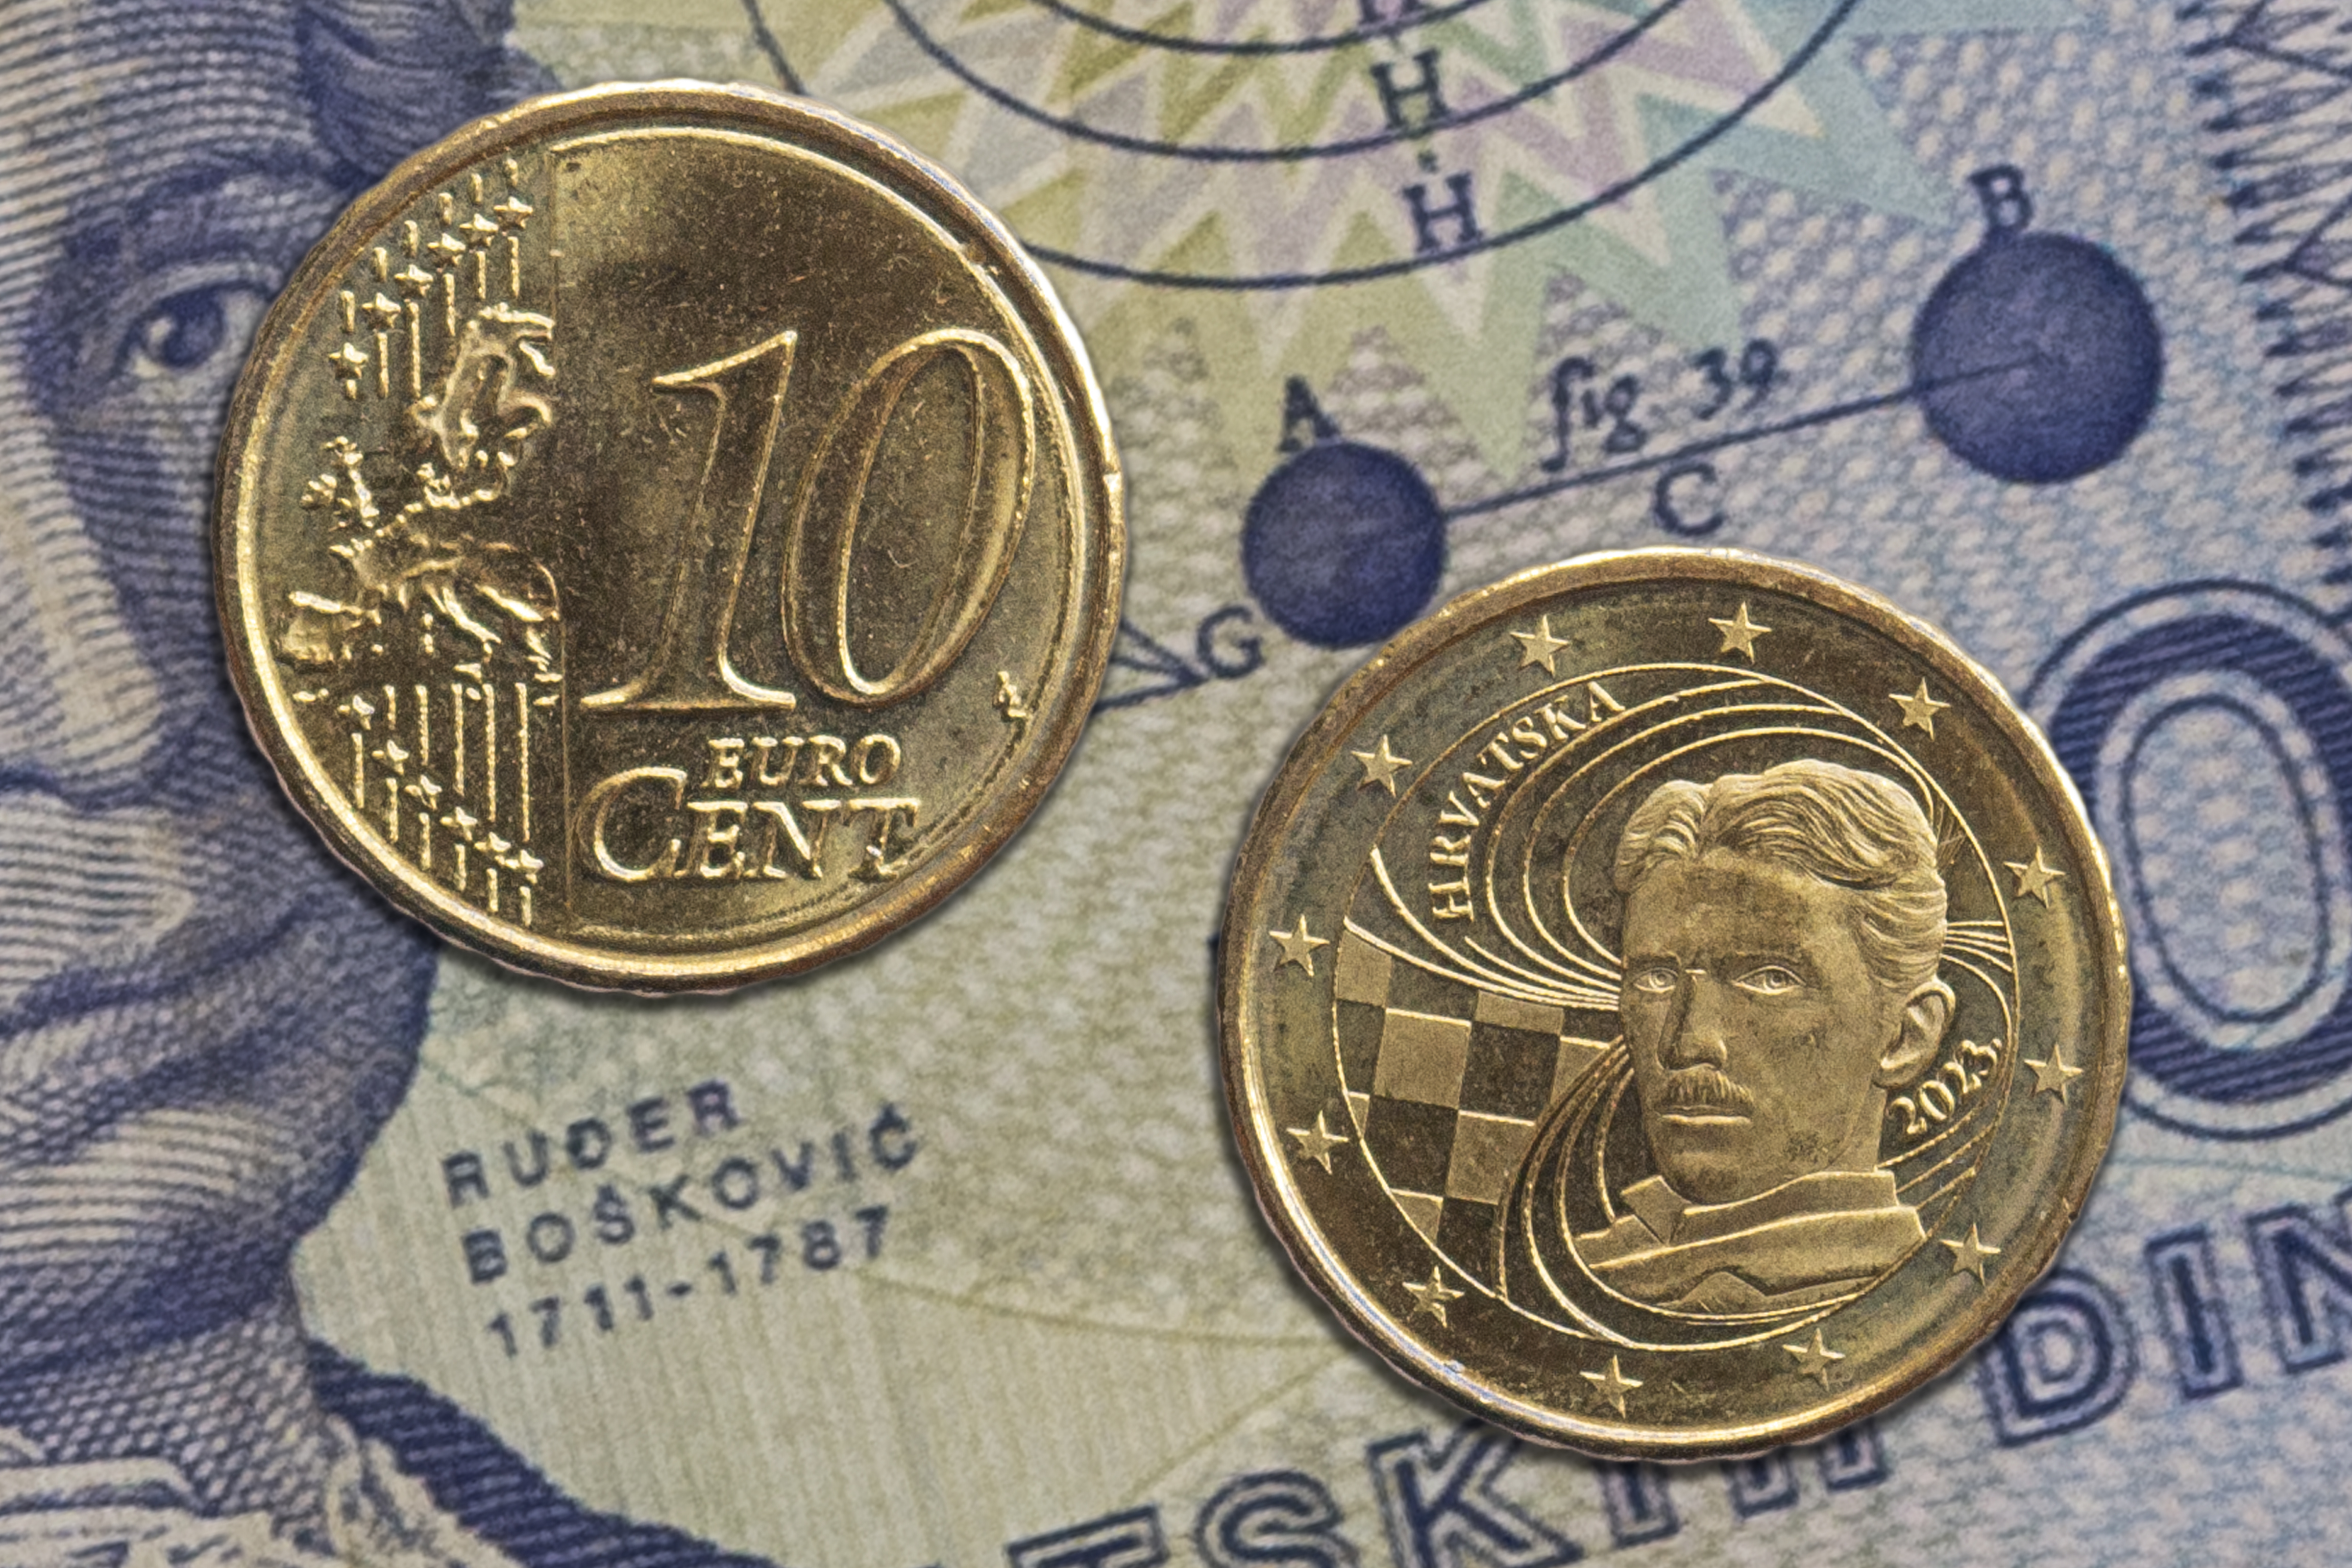 Croatian 2023 euro cent coin obverse and reverse, depicting Nikola Tesla